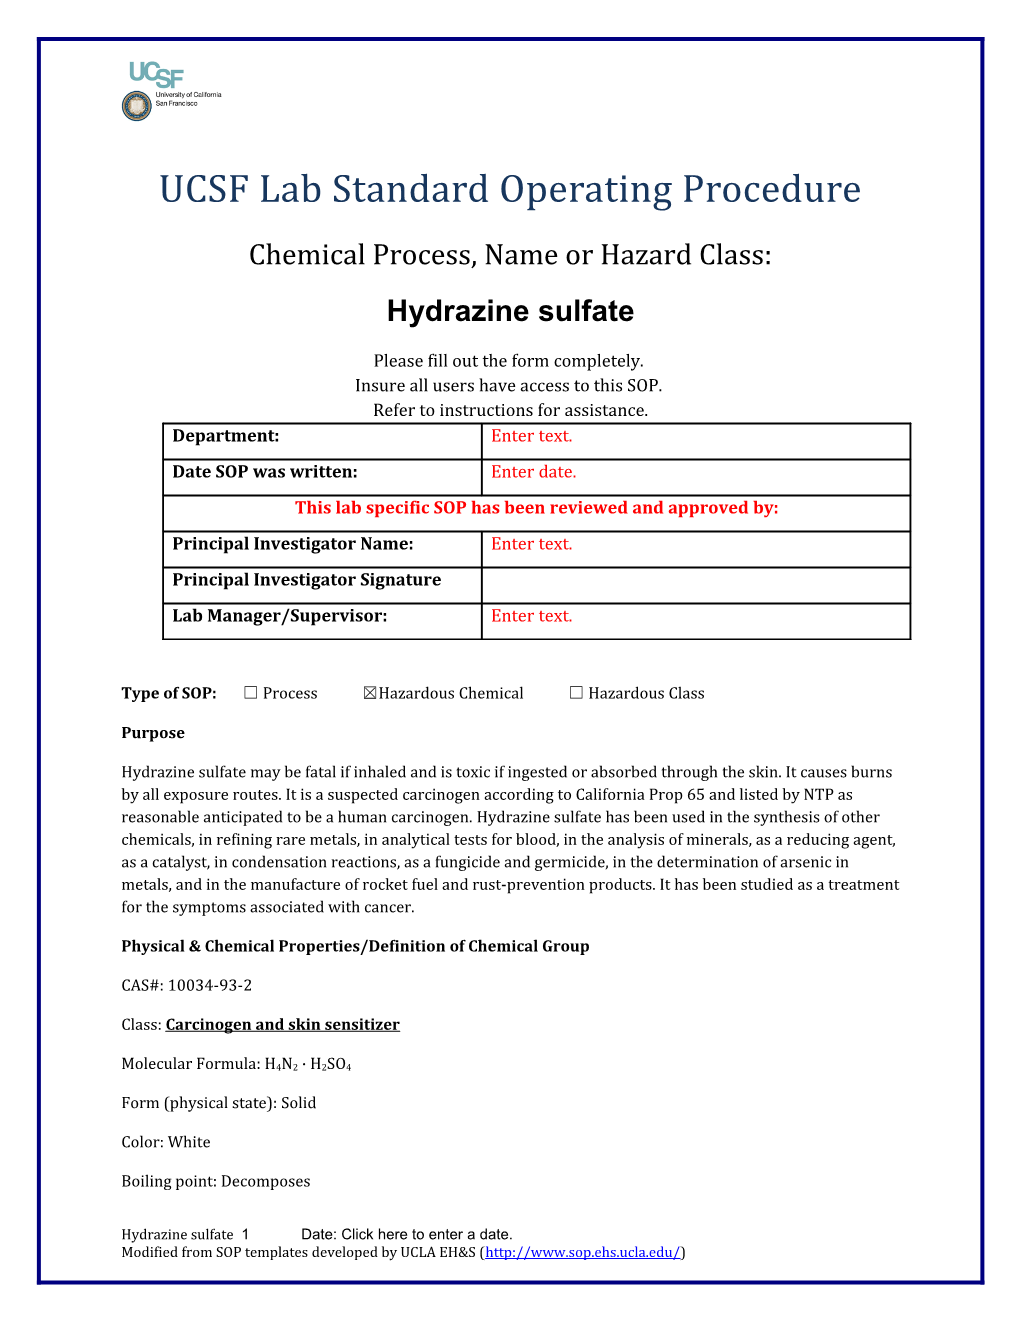 UCSF Lab Standard Operating Procedure s20